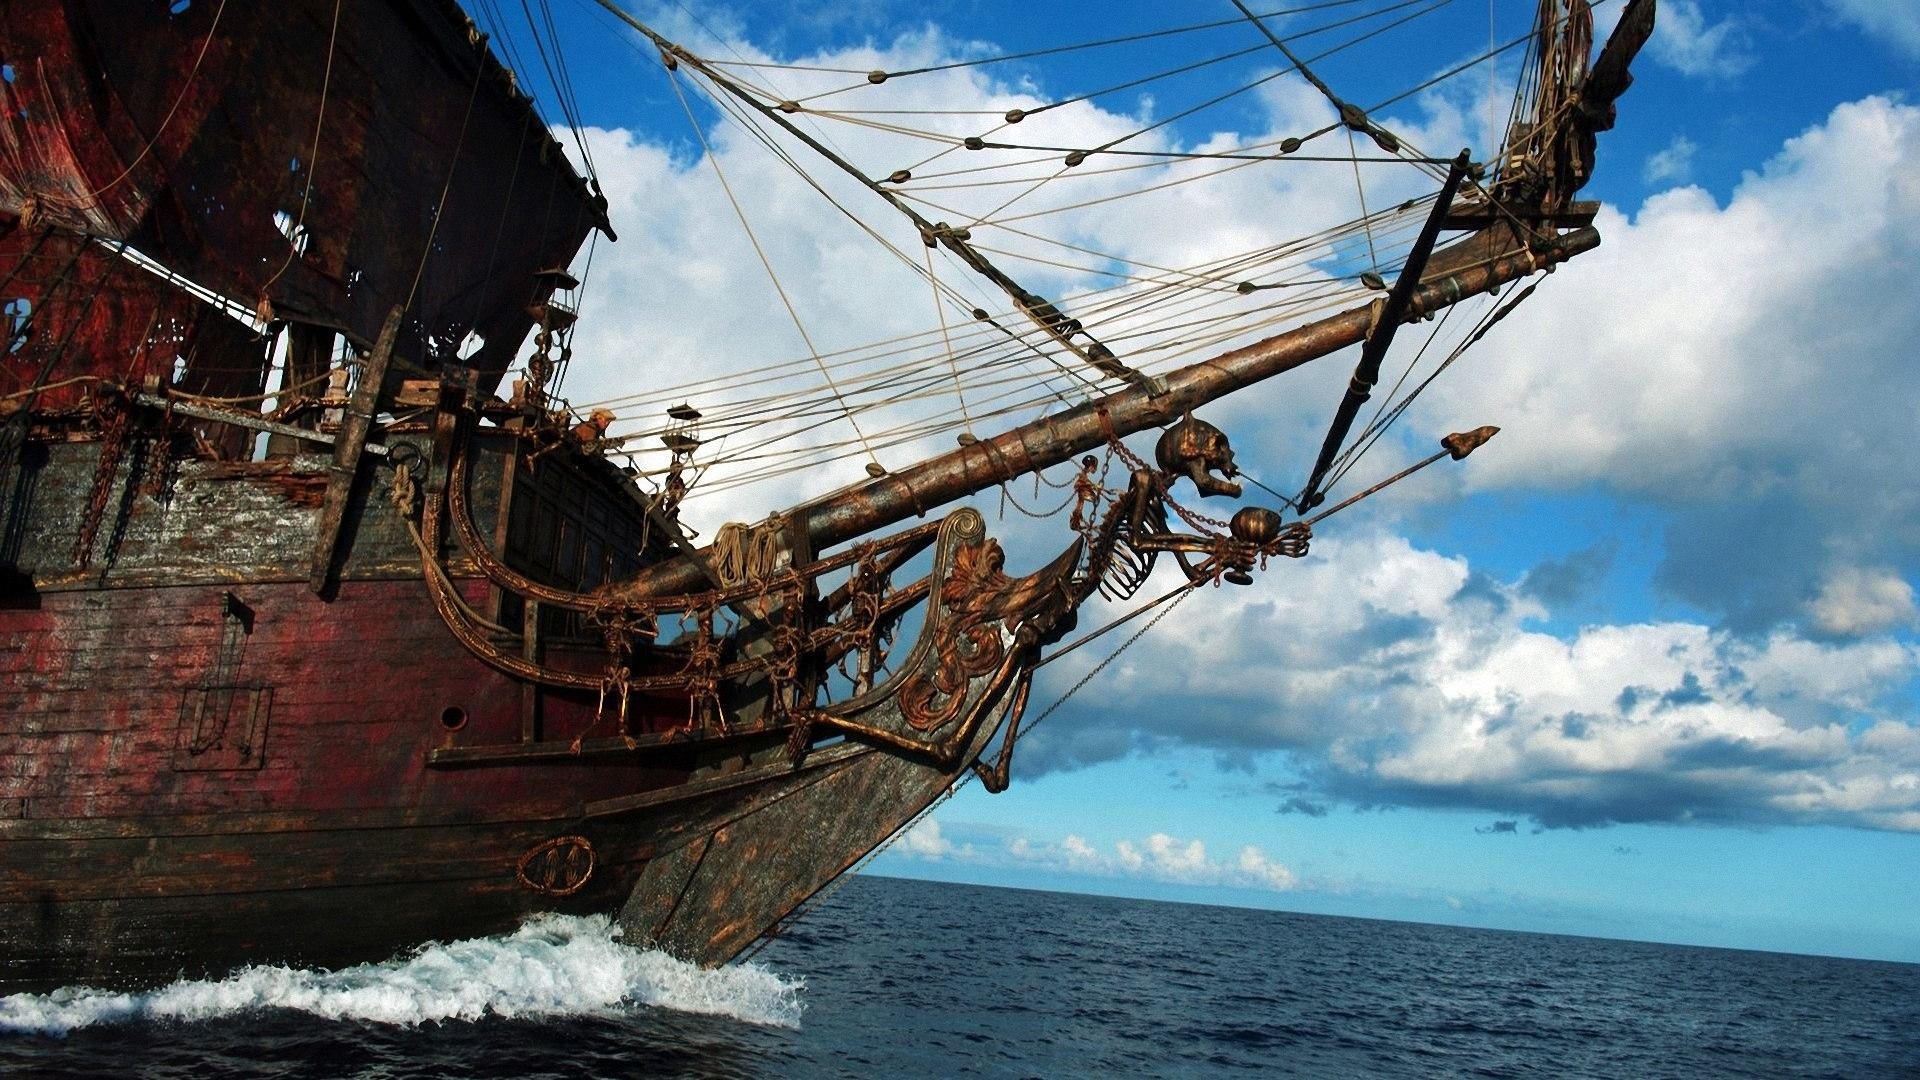 1920x1080 Pirates Of The Caribbean On Stranger Tides Ship wallpaper - 457040